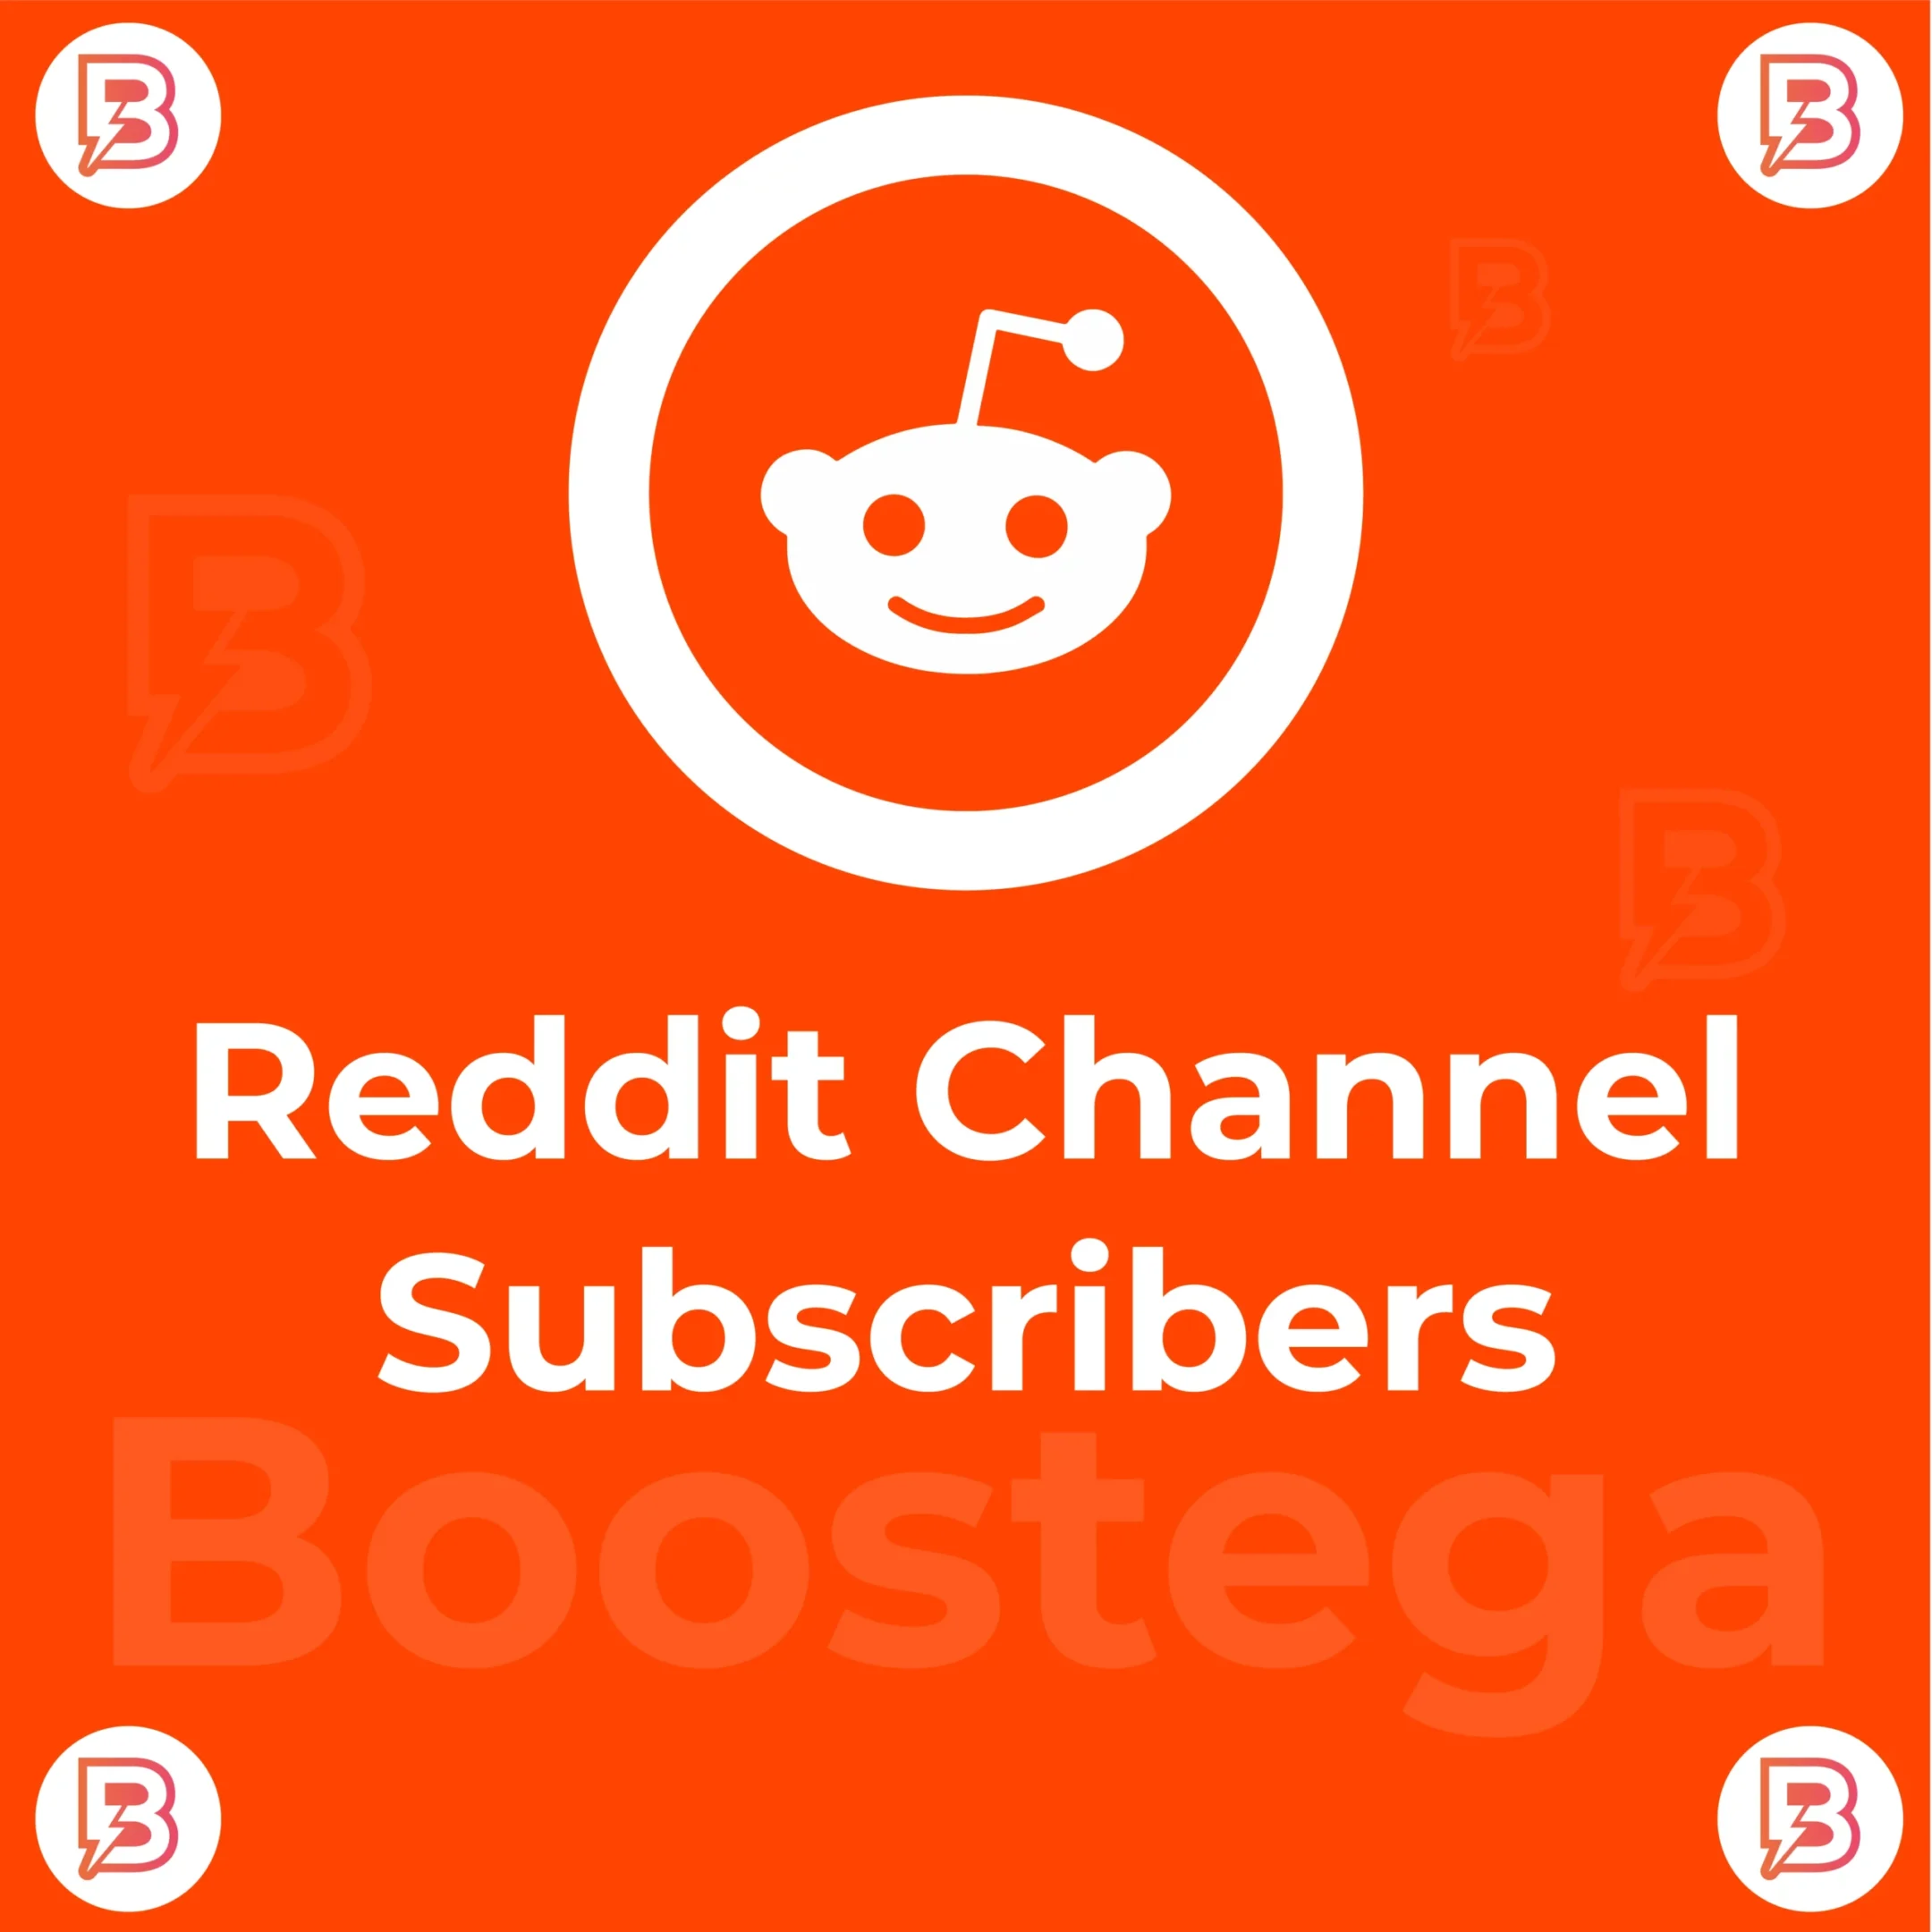 Buy Reddit Channel Subscribers